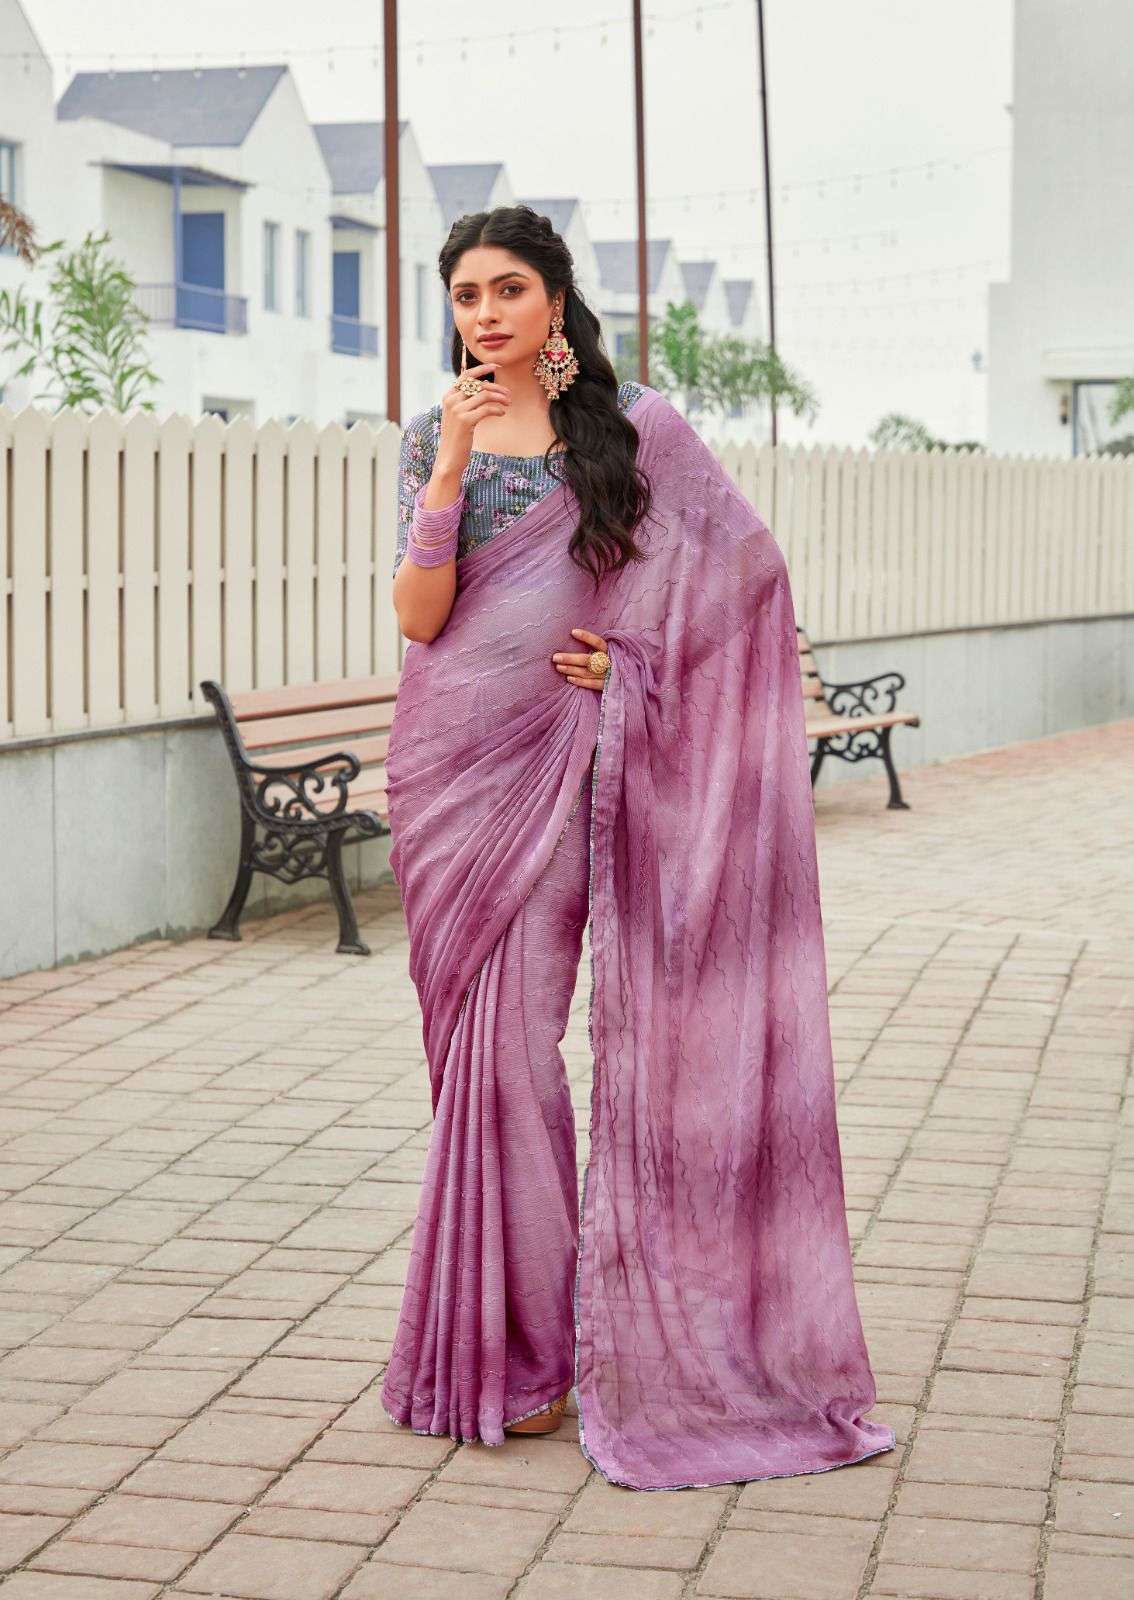 saree original not copy catlogue olivia fabric 3d shaded chiffon fabric with sequence embroidery work in body and digital sequence embroidery work blouse saree 